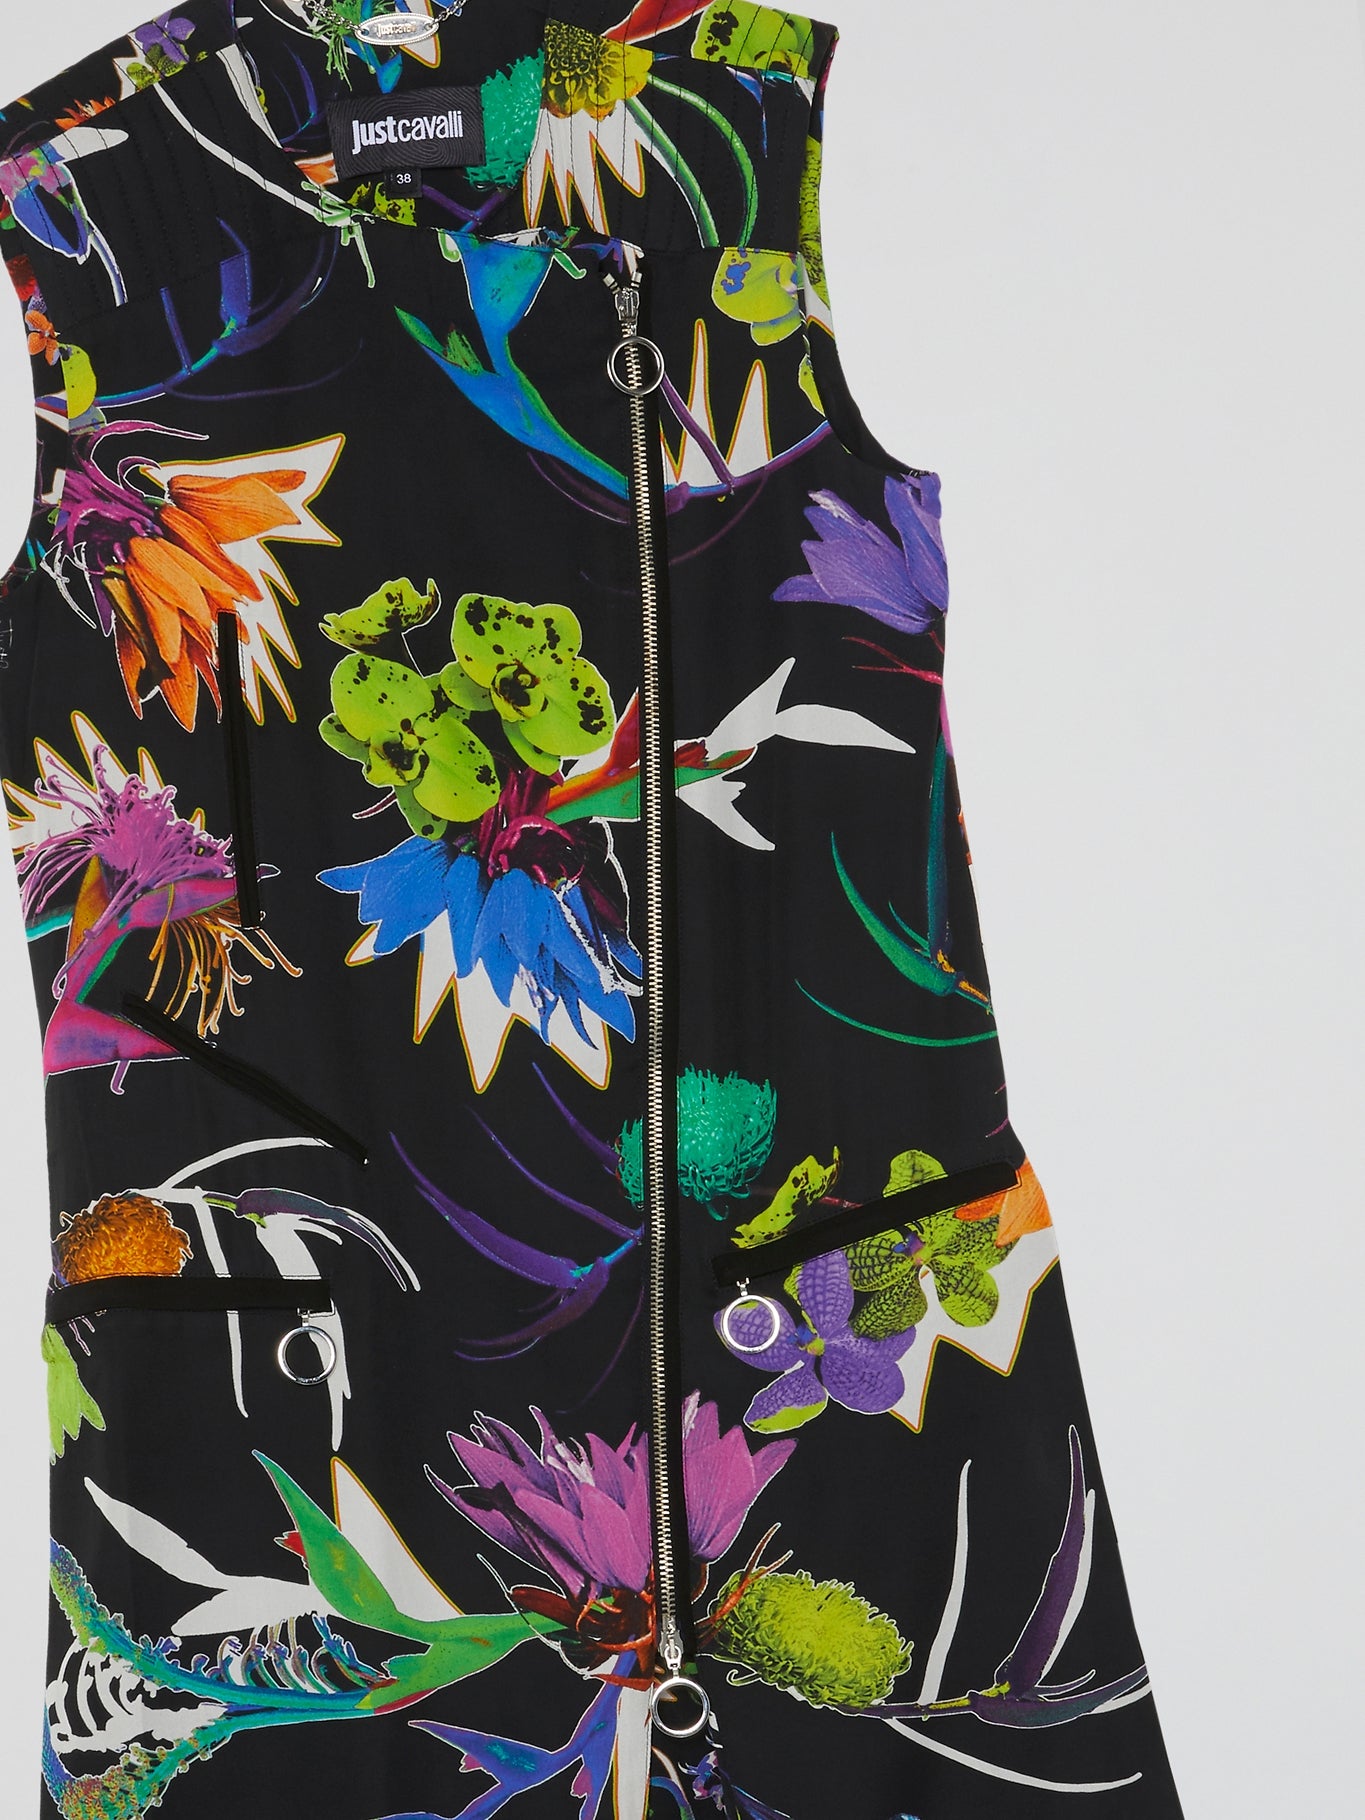 Floral Print Zip-Up Dress